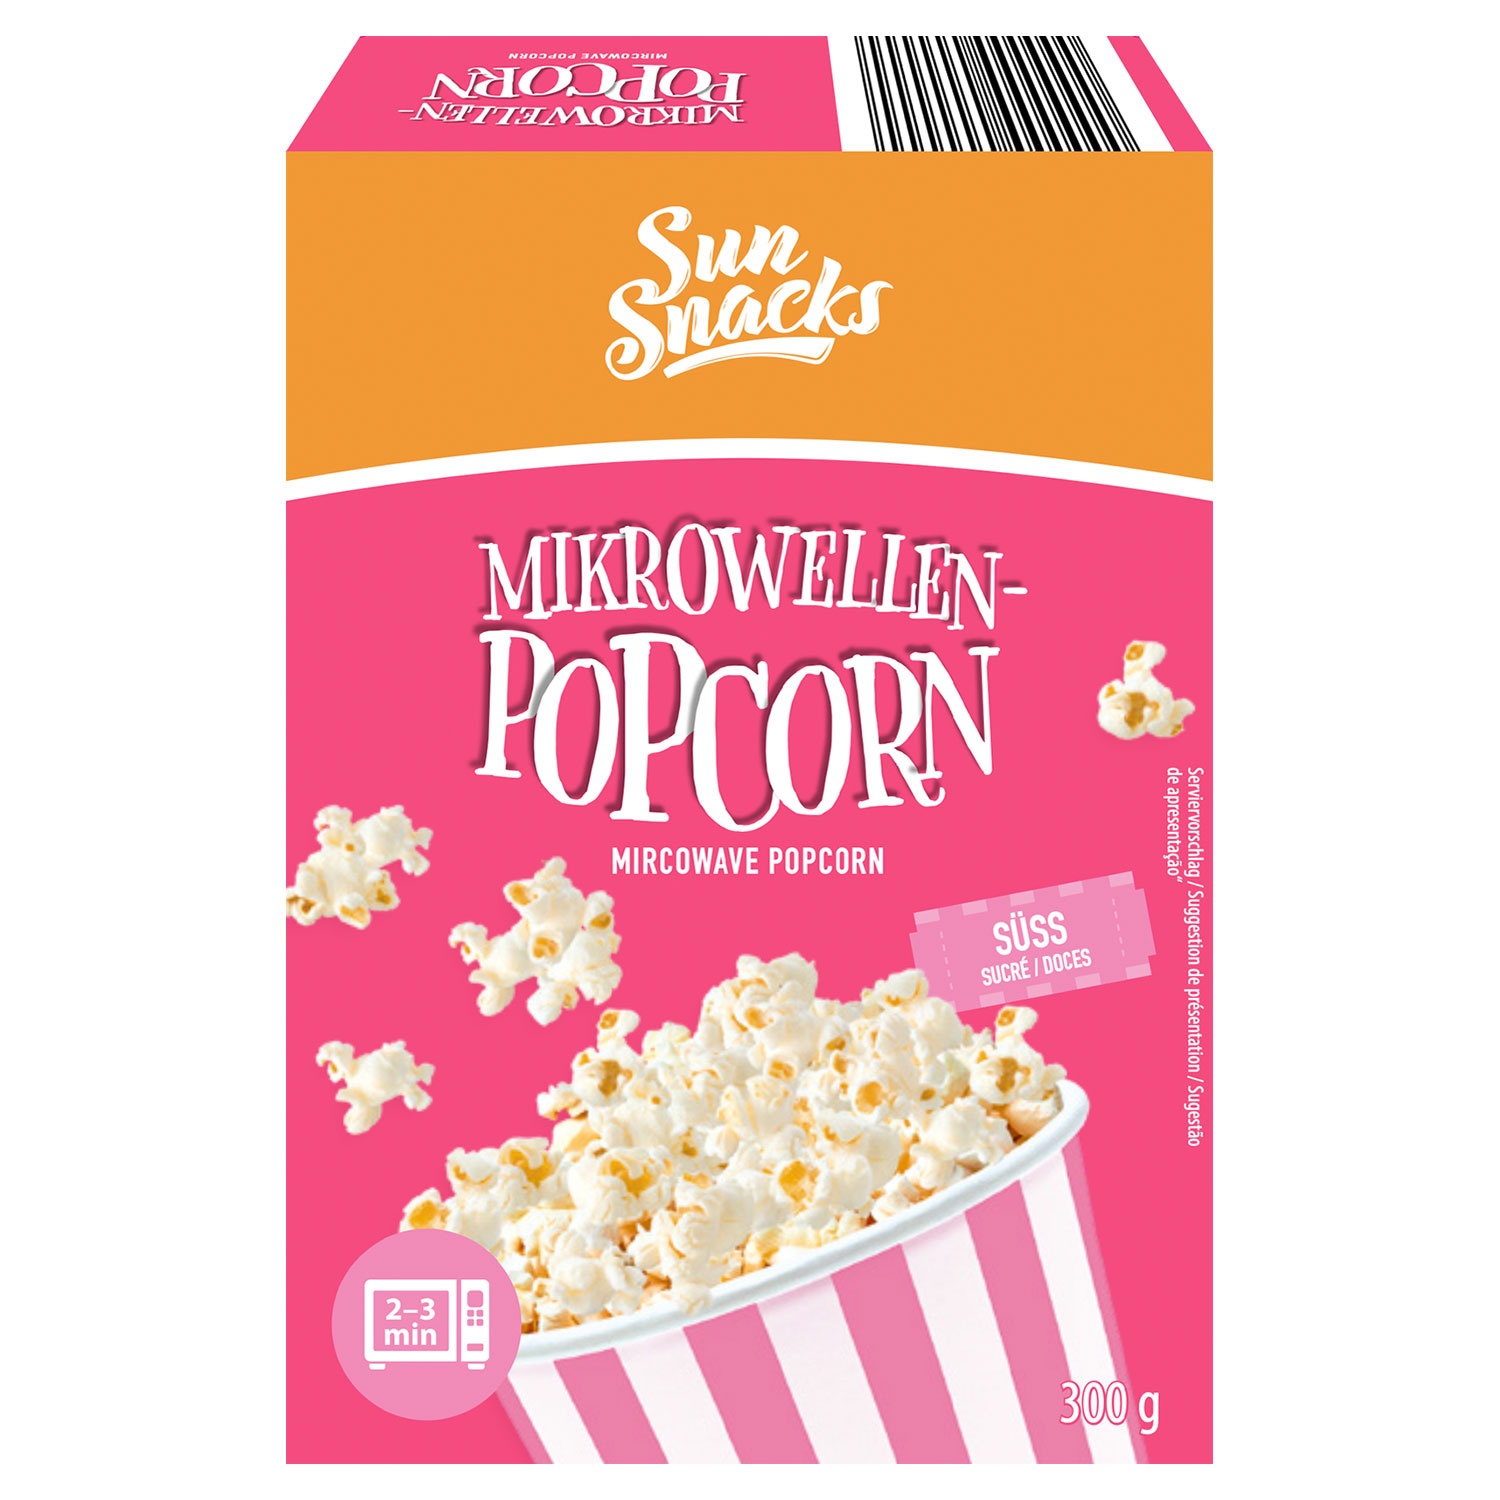 SUN SNACKS Mikrowellen-Popcorn 300 g